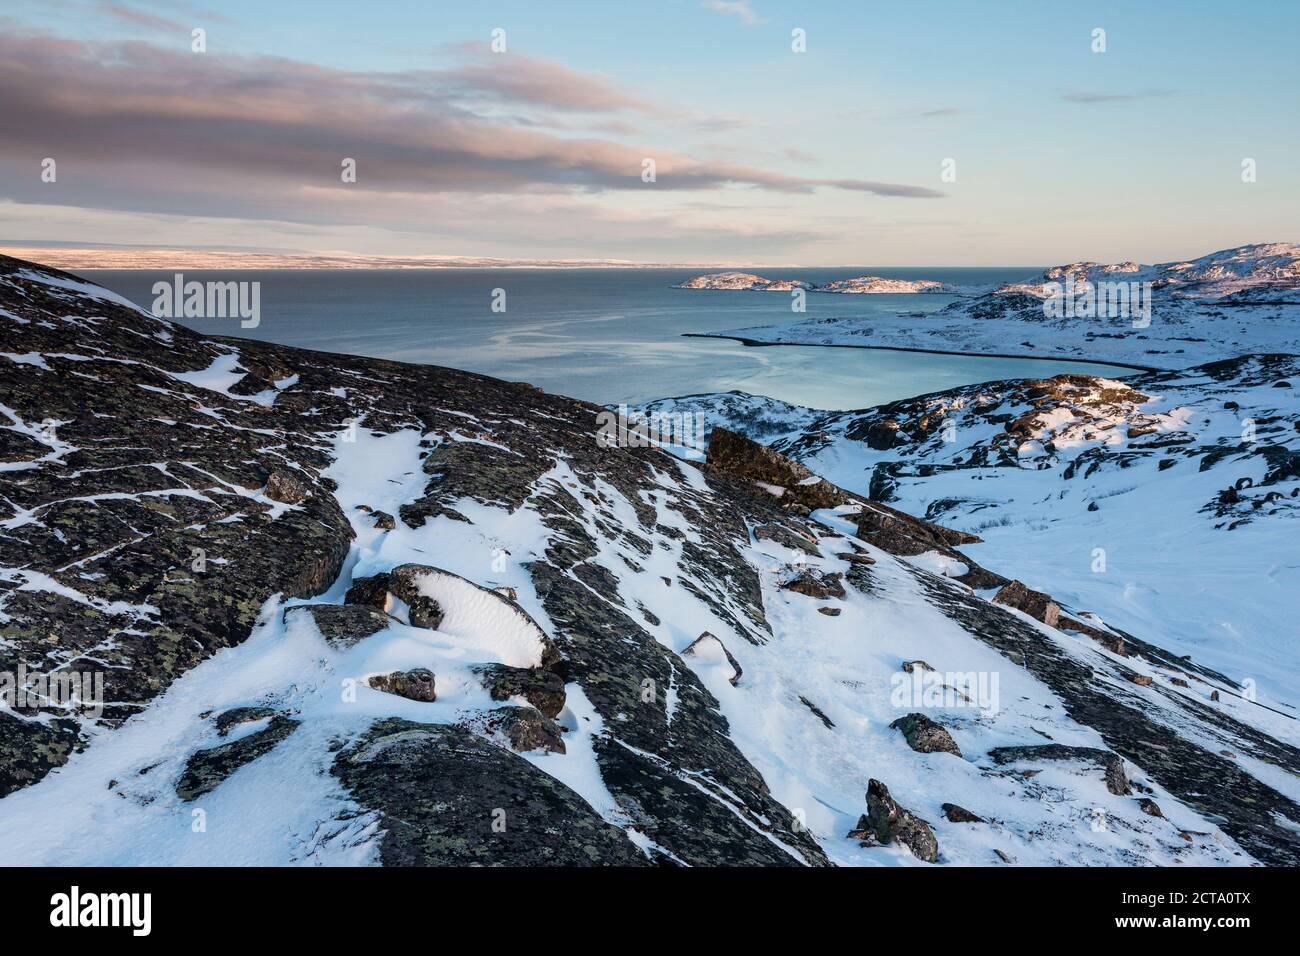 Norvegia, Karlebotn, Varangerfjord, coperto di neve superficie di roccia Foto Stock